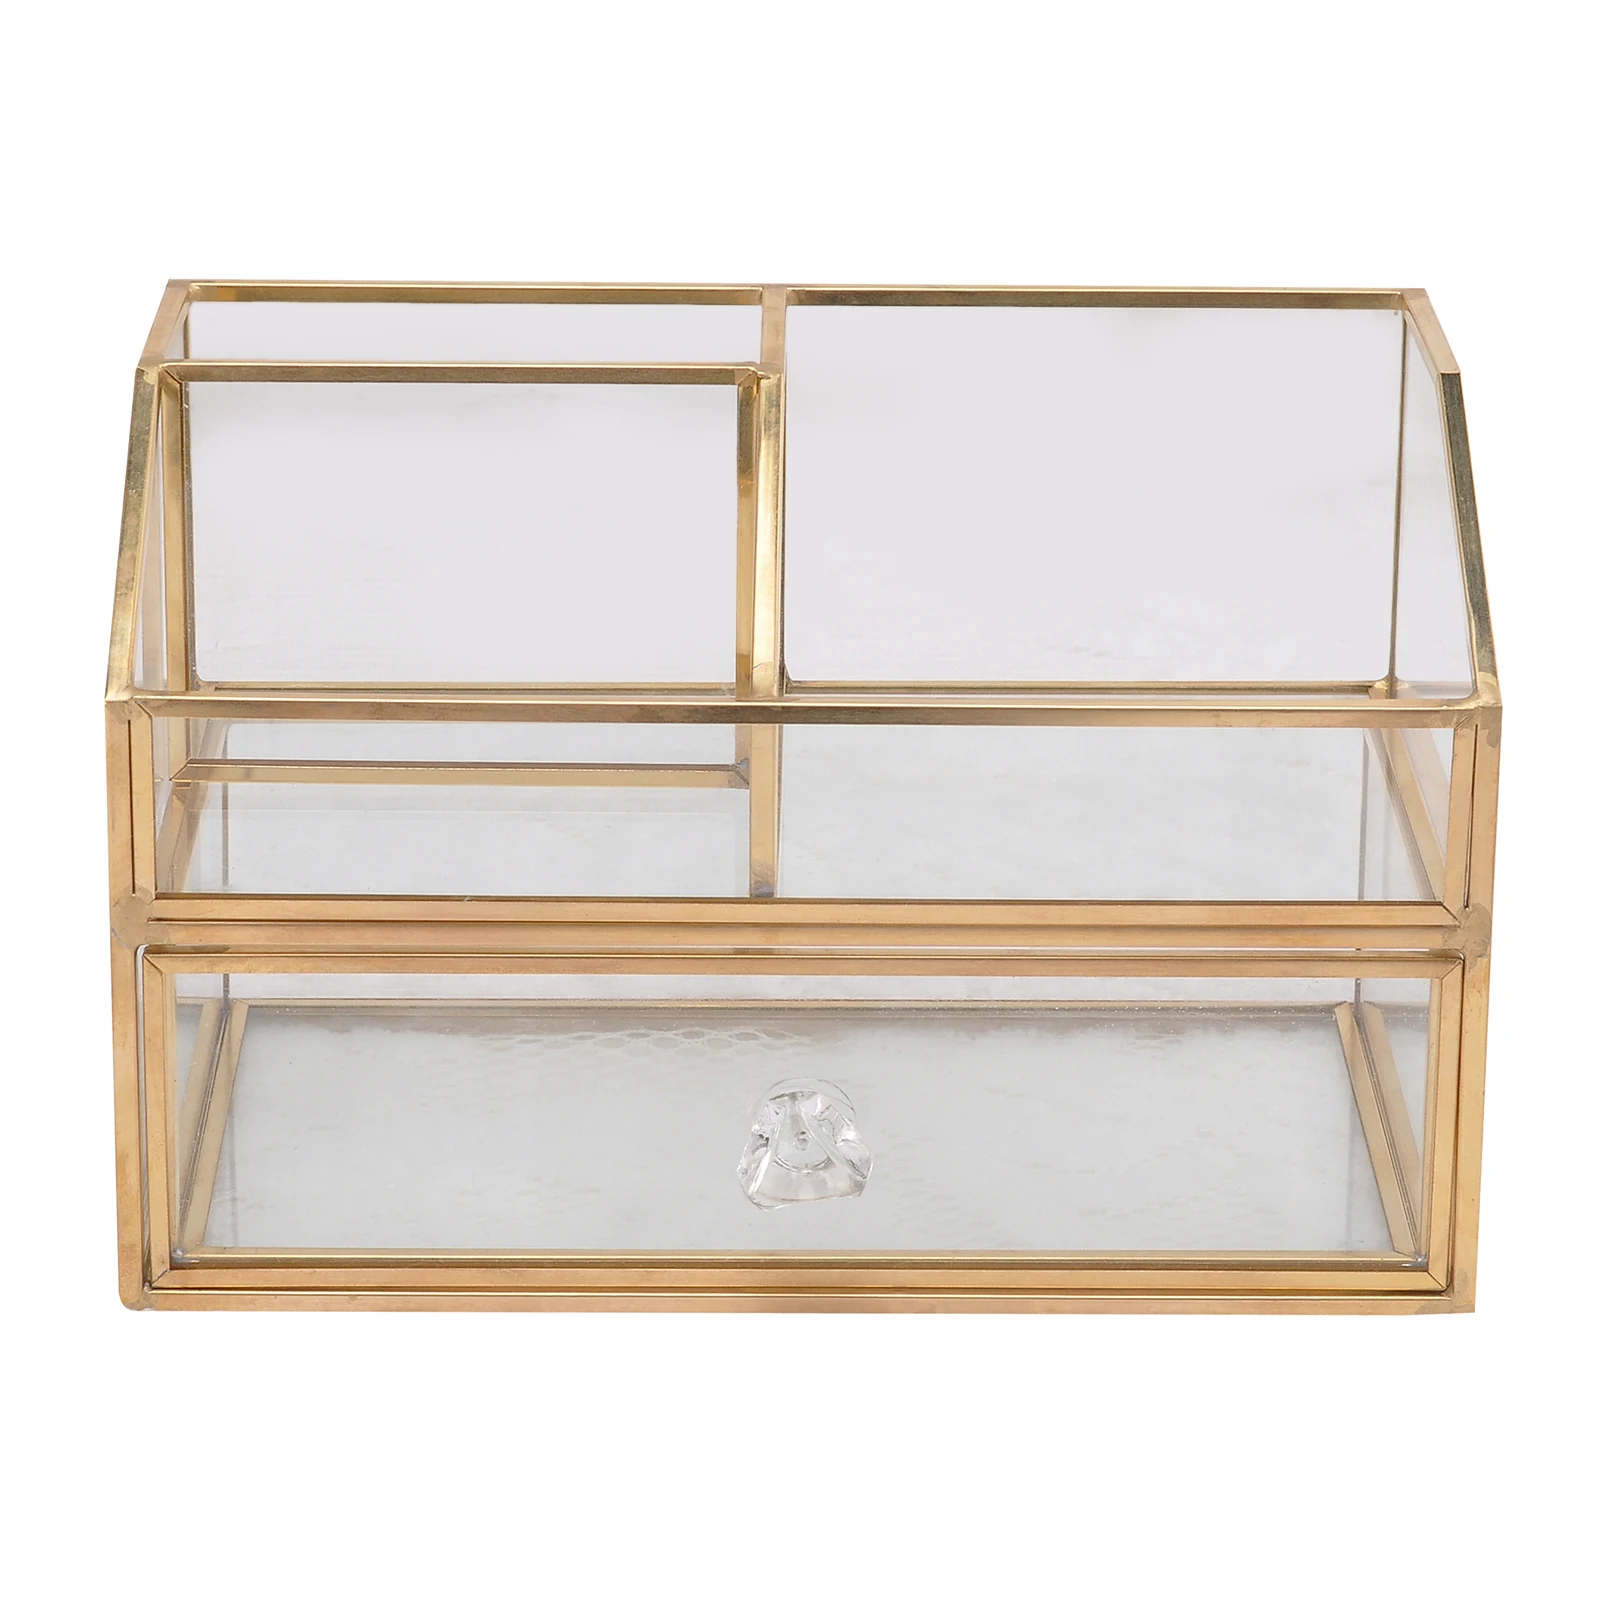 Glass Storage Box Cosmetics Display Jewelry Case Holder Organizer Container Rack